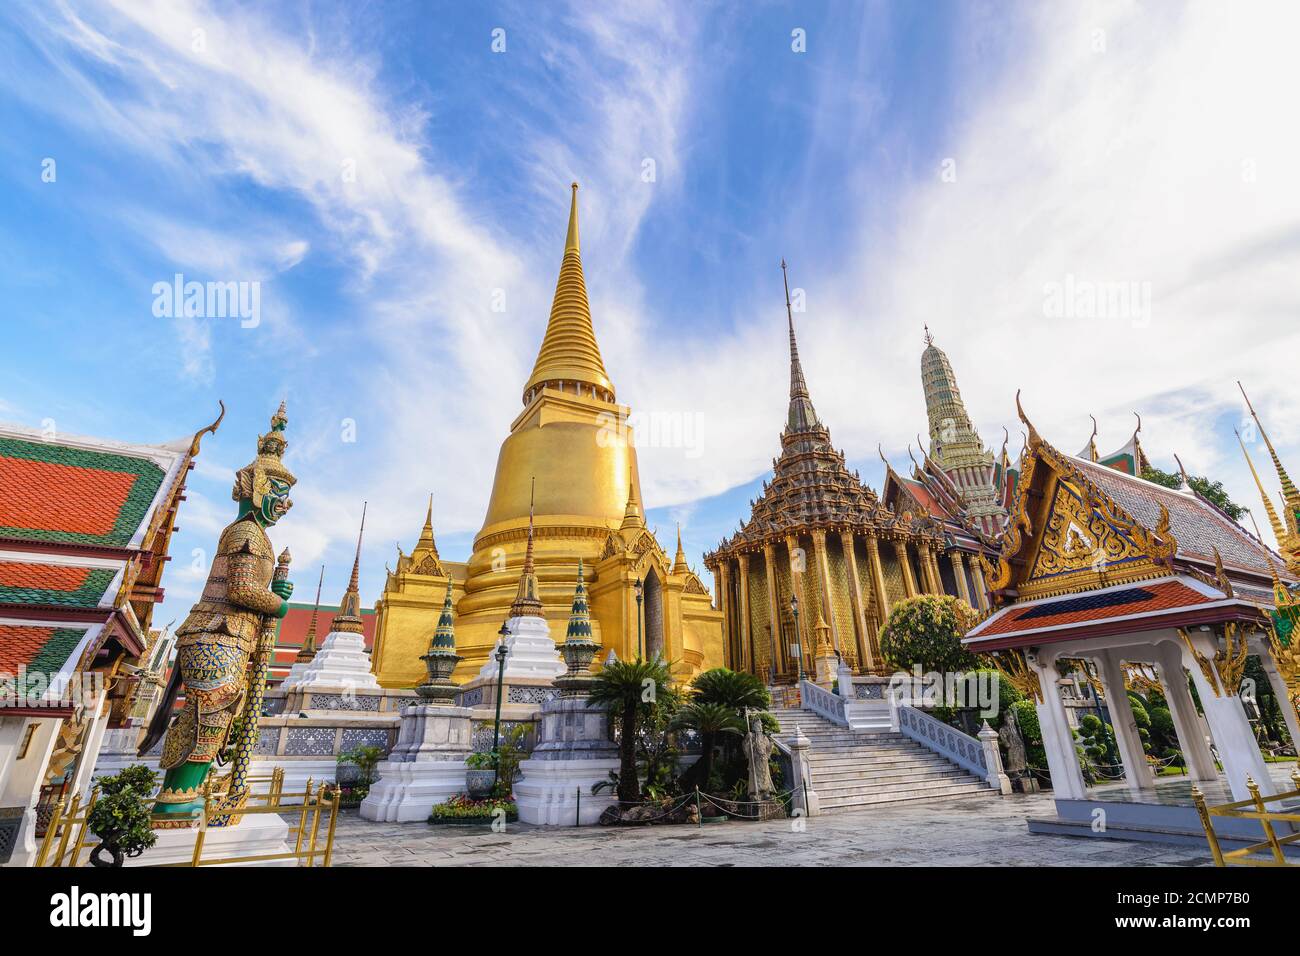 Bangkok Thailand, city skyline at Wat Phra Kaew temple Stock Photo